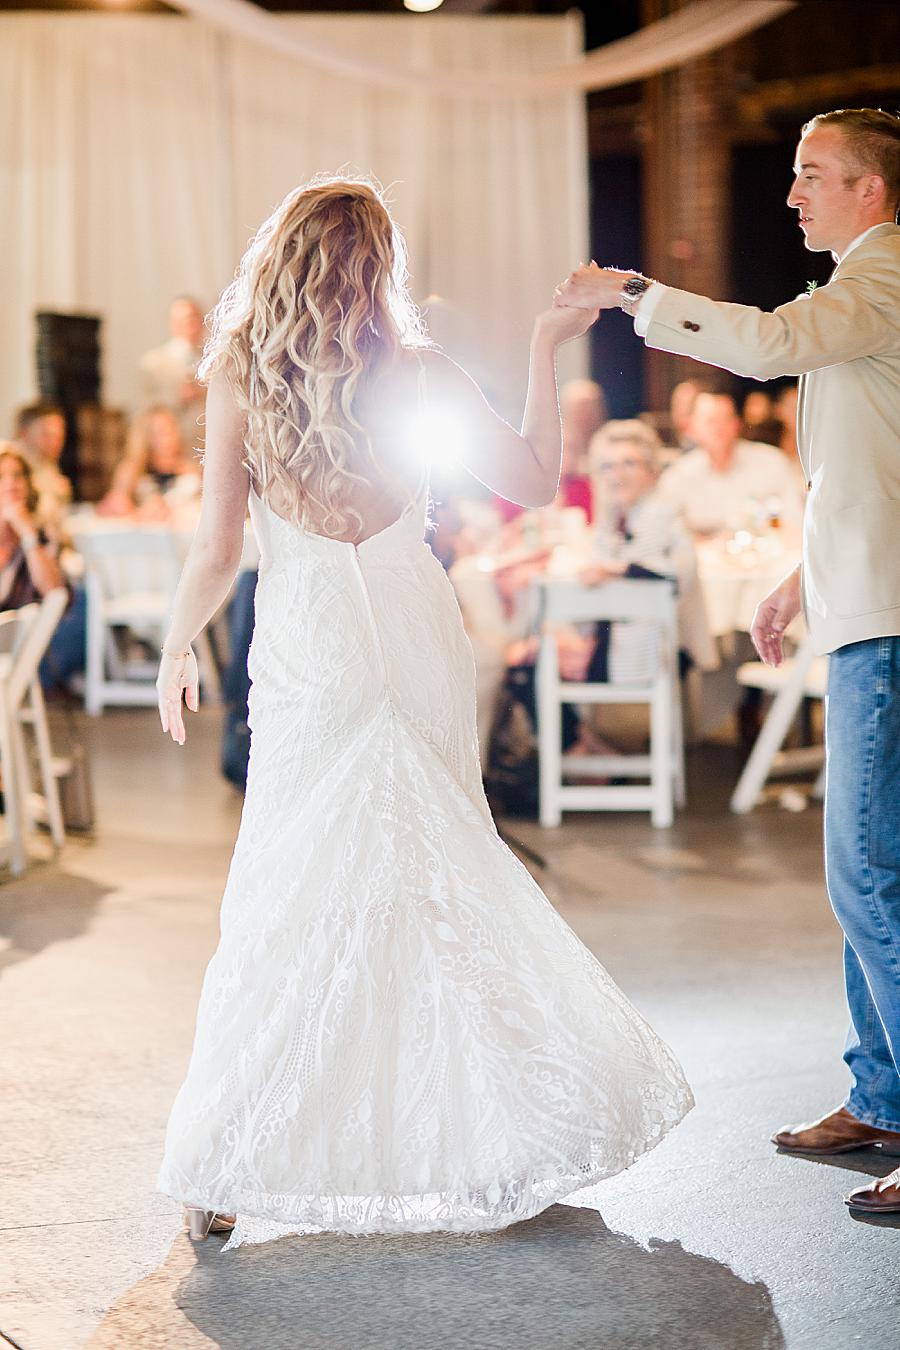 Indoor photography at this Dayton wedding by Knoxville Wedding Photographer, Amanda May Photos.